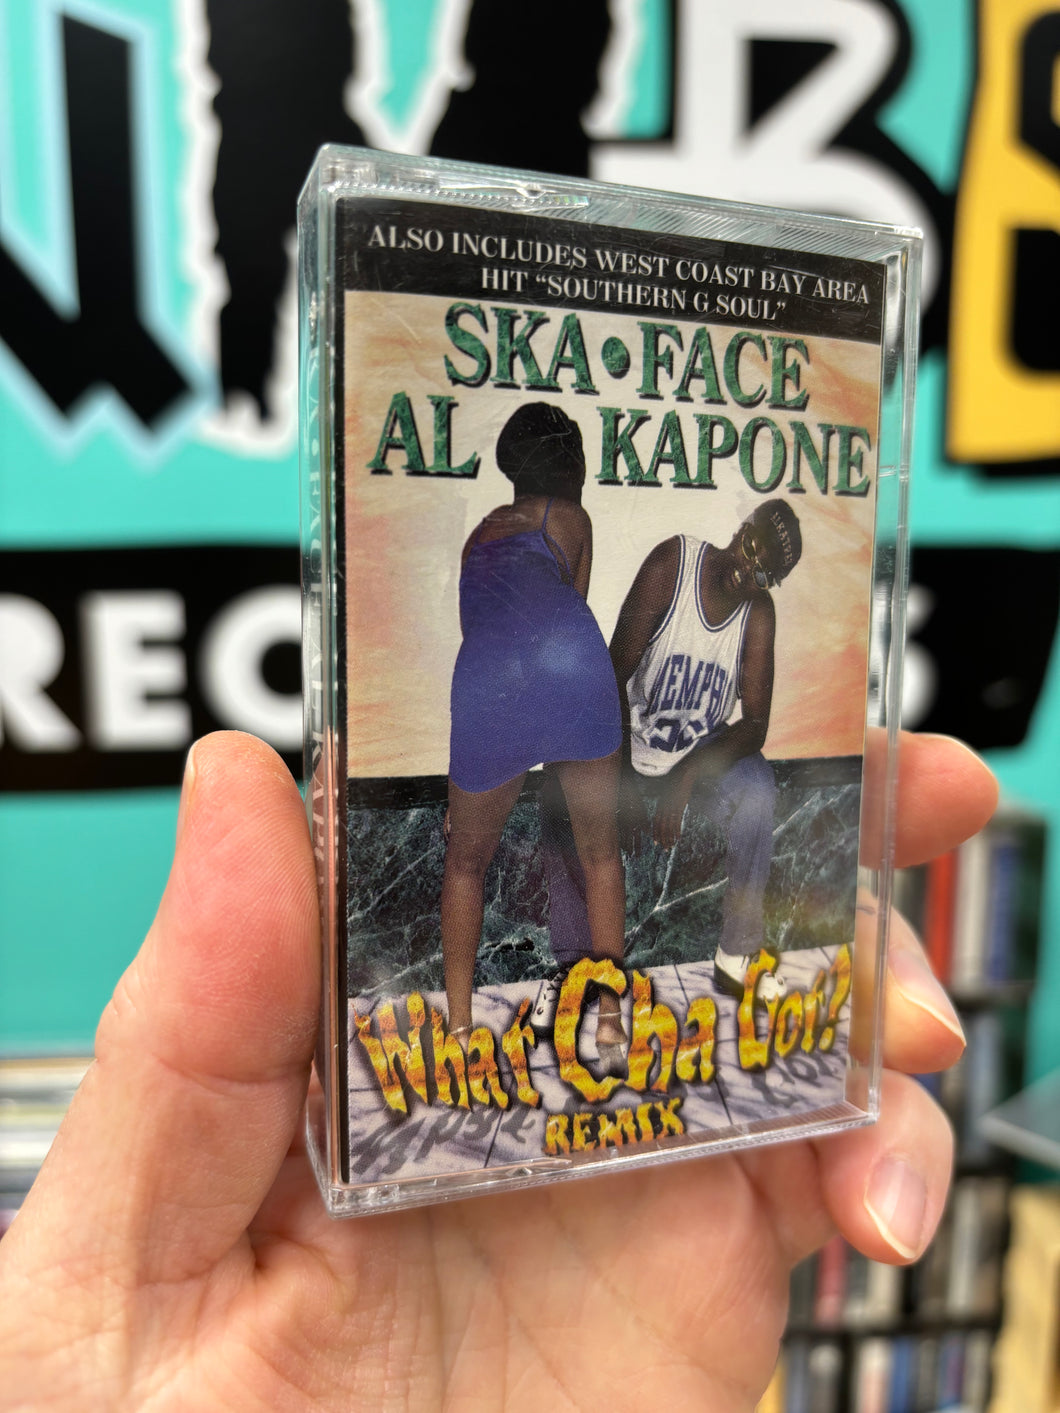 Al Kapone: What Cha Got (Remix), C-cassette Maxi-single, OG pressing, US 1997